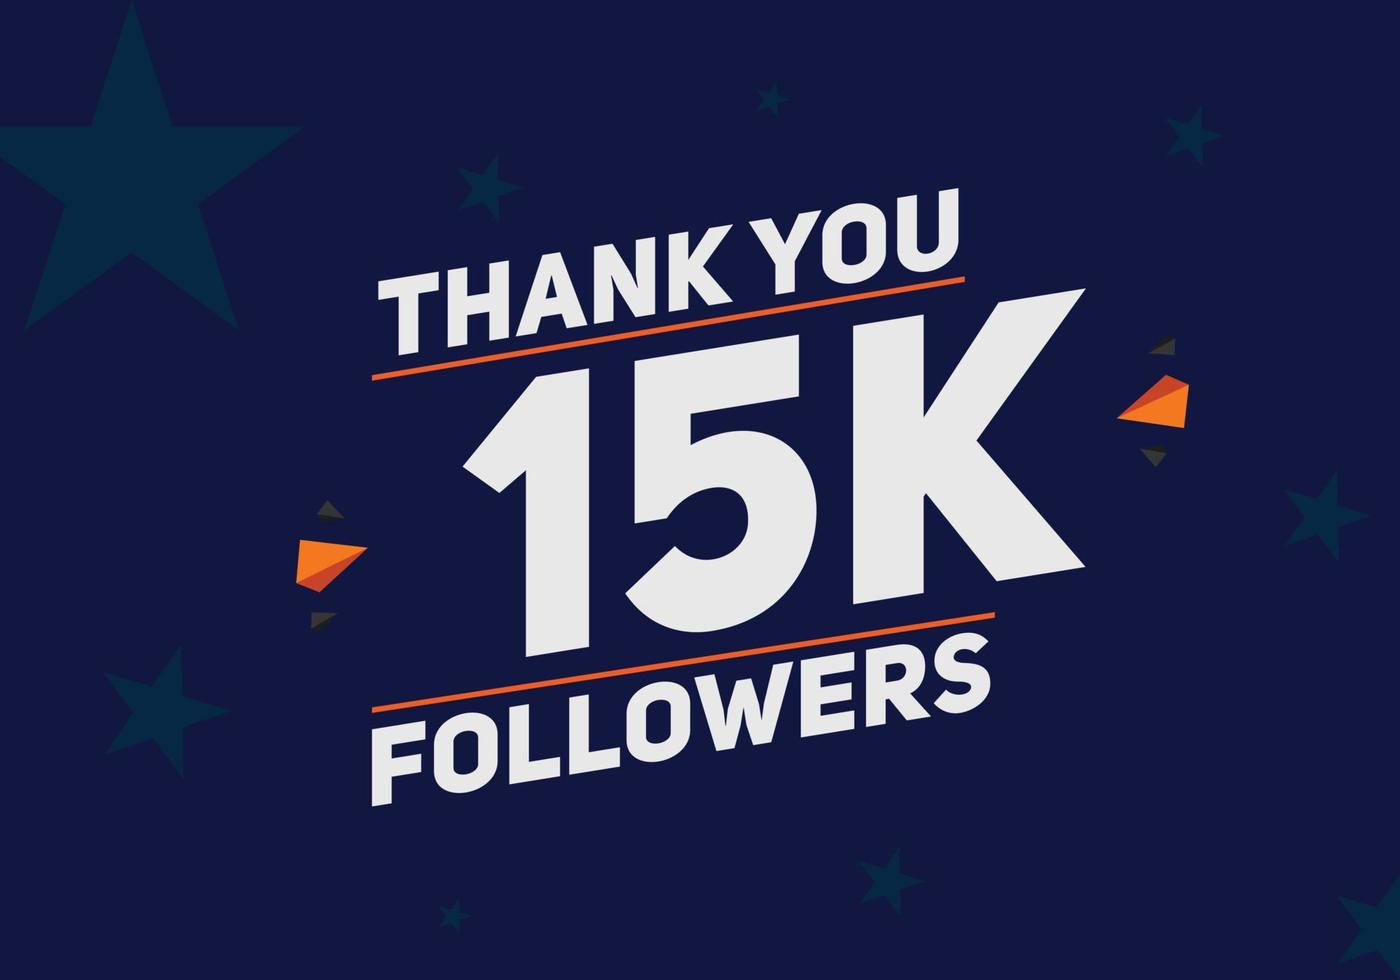 15k followers thank you colorful celebration template social media 15000 followers achievement banner vector